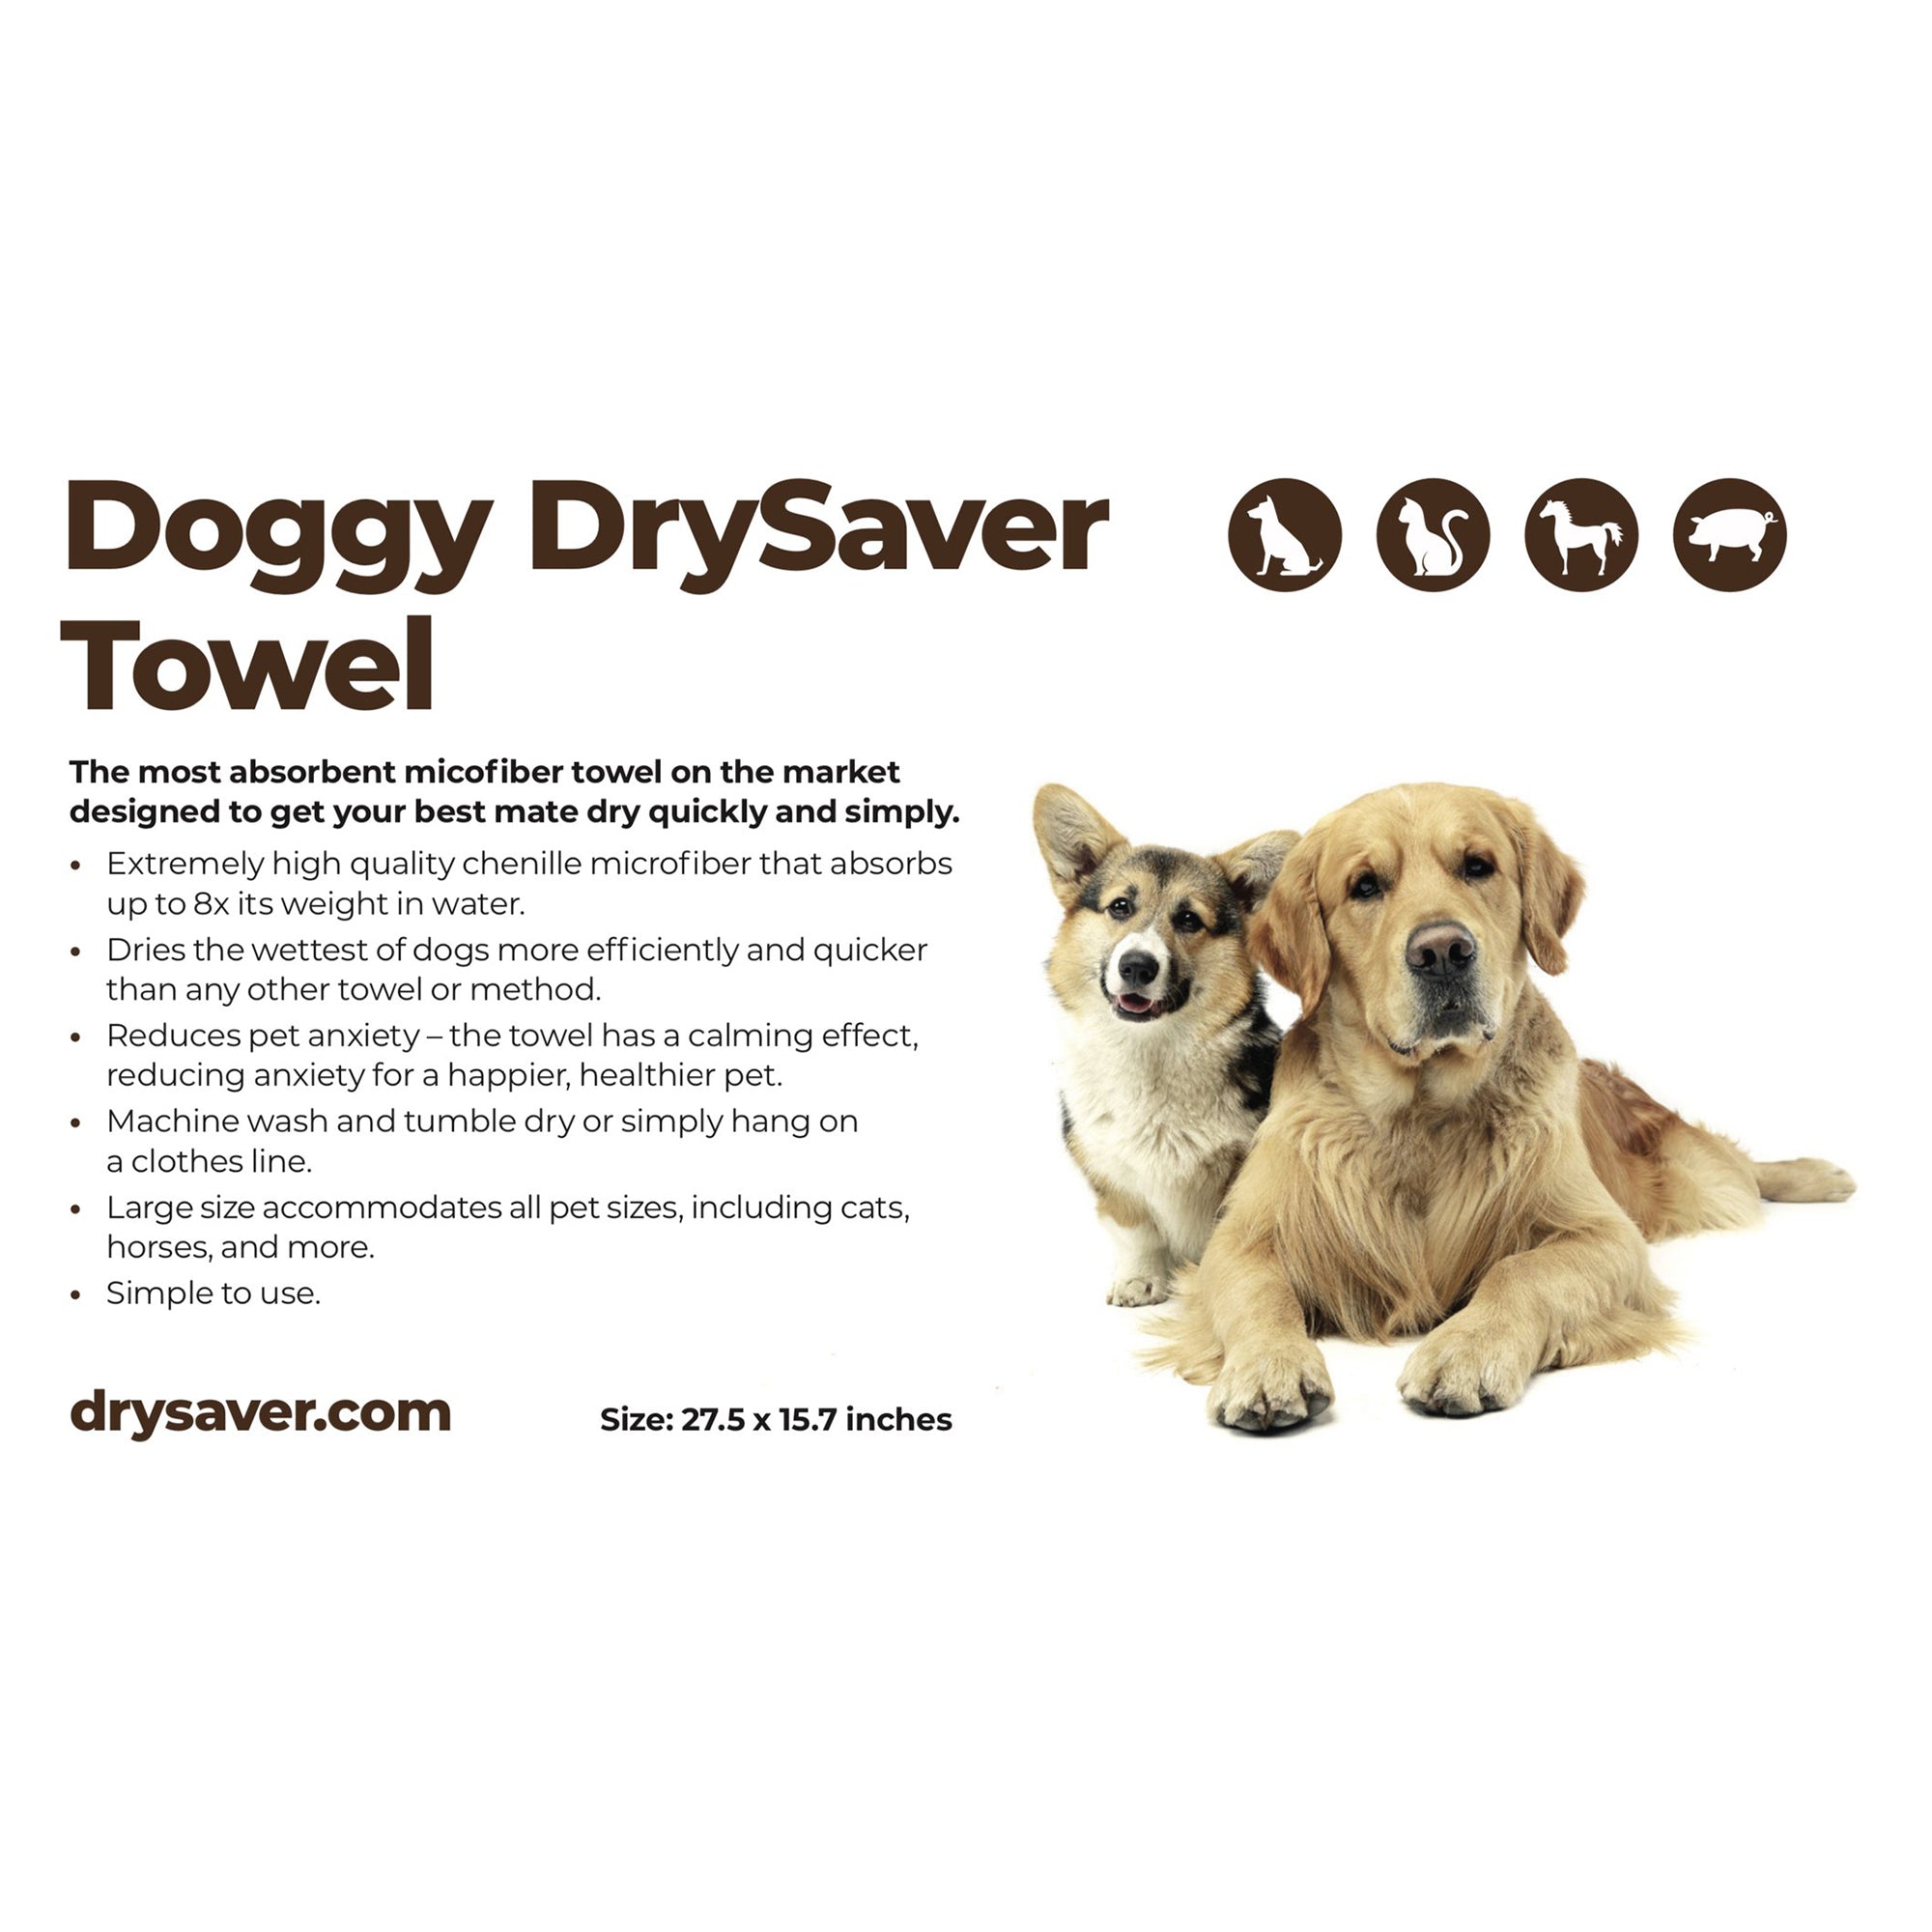 Doggy DrySaver Towel